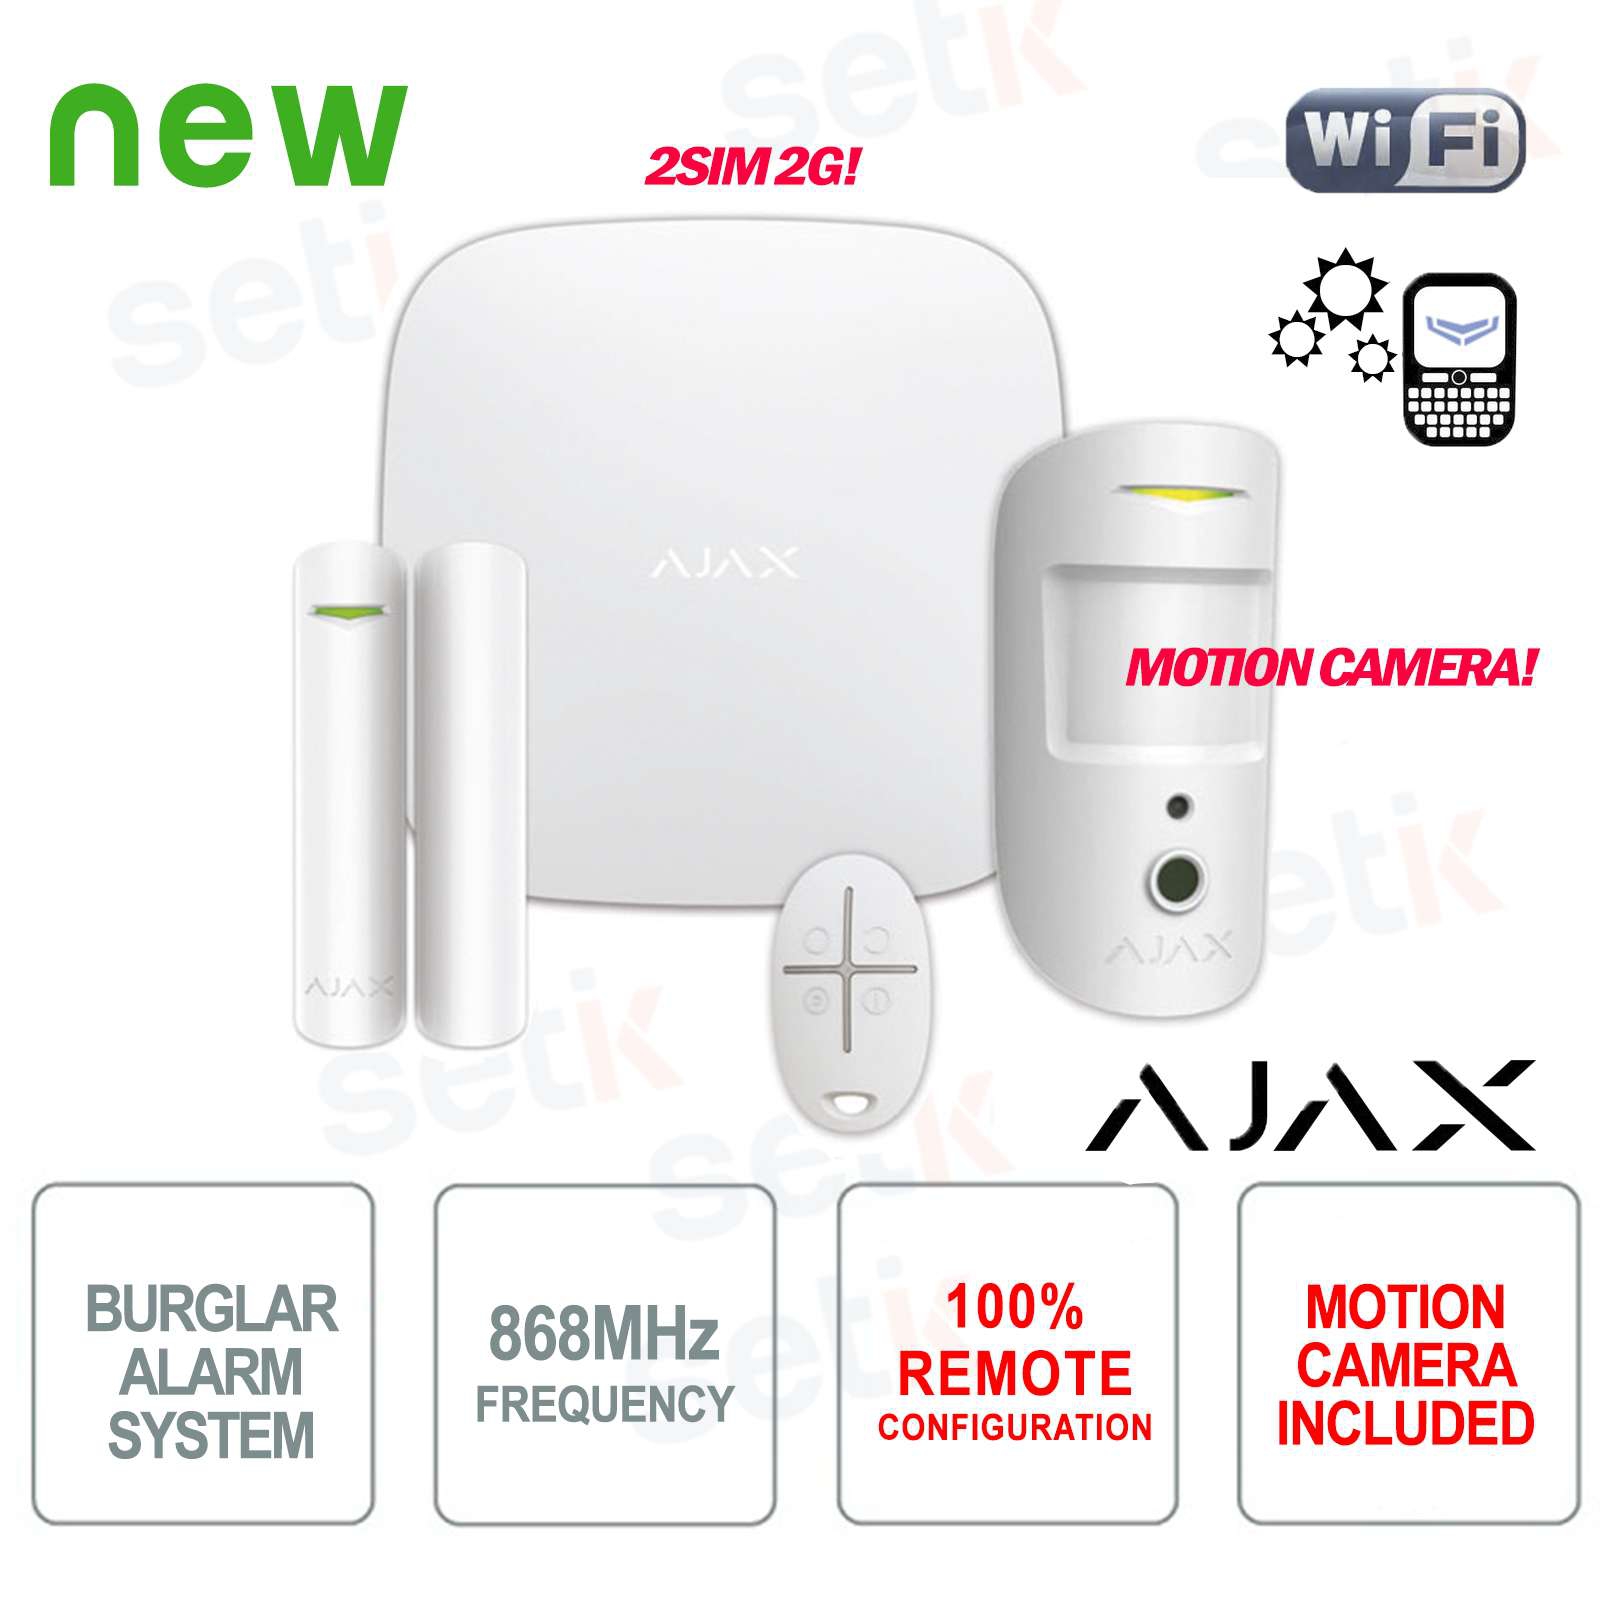 Alarme Ajax StarterKit Plus - Alarme connectée sans fil - Kit 12